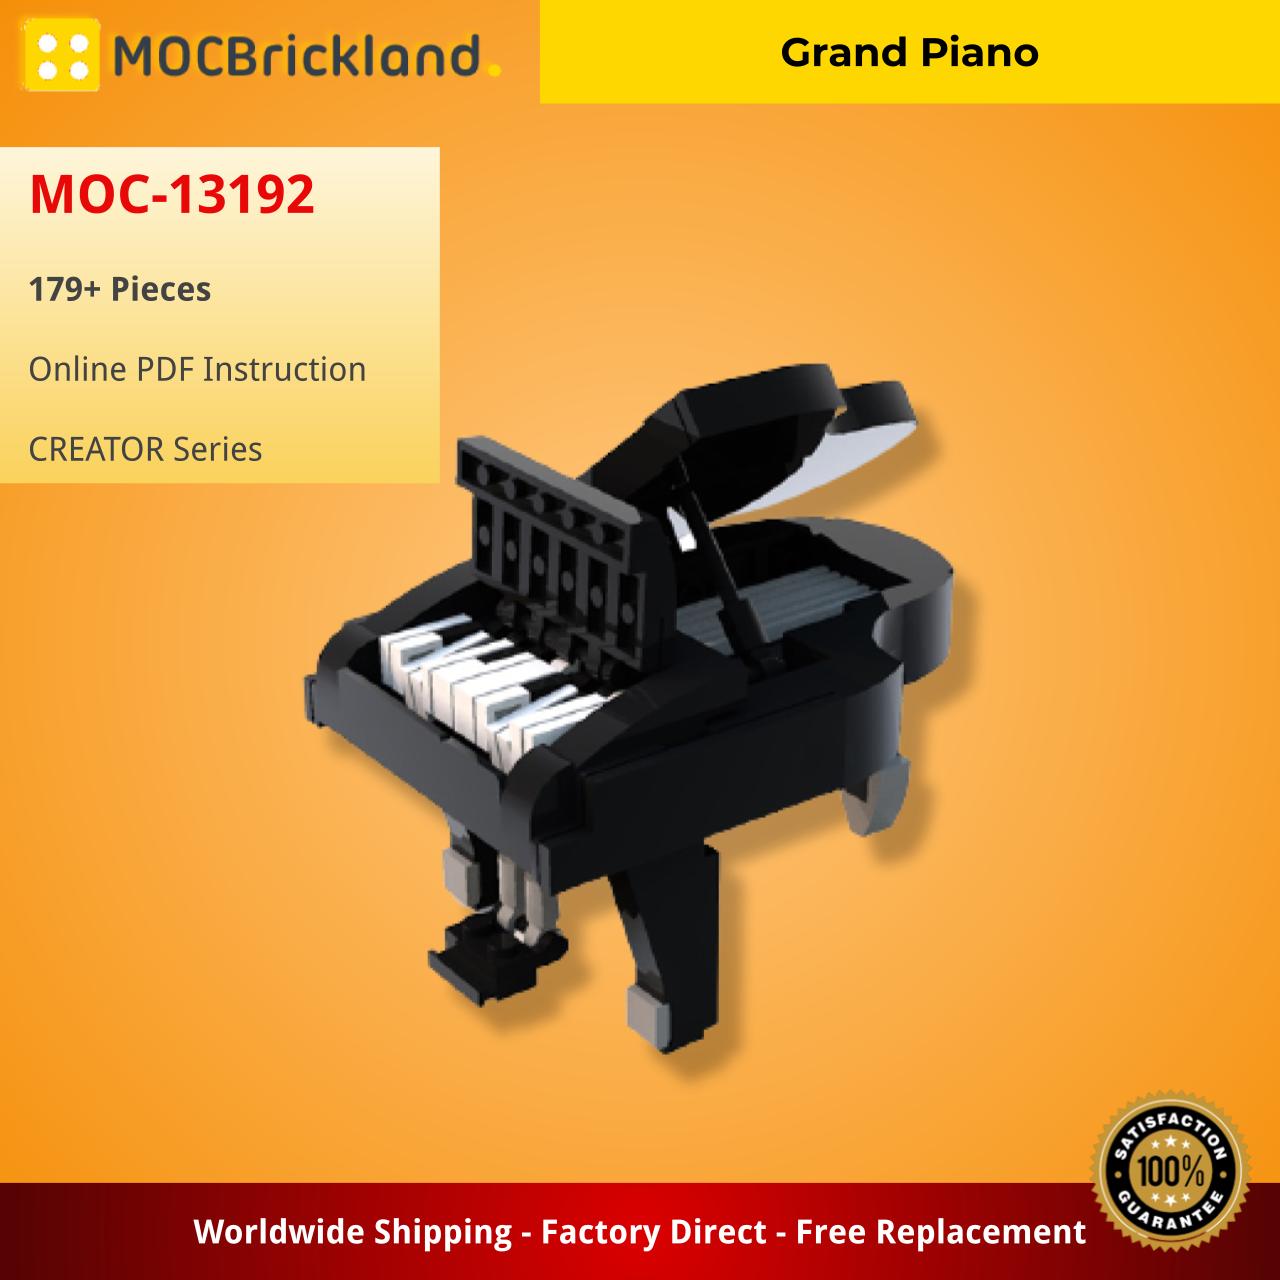 MOCBRICKLAND MOC-13192 Grand Piano